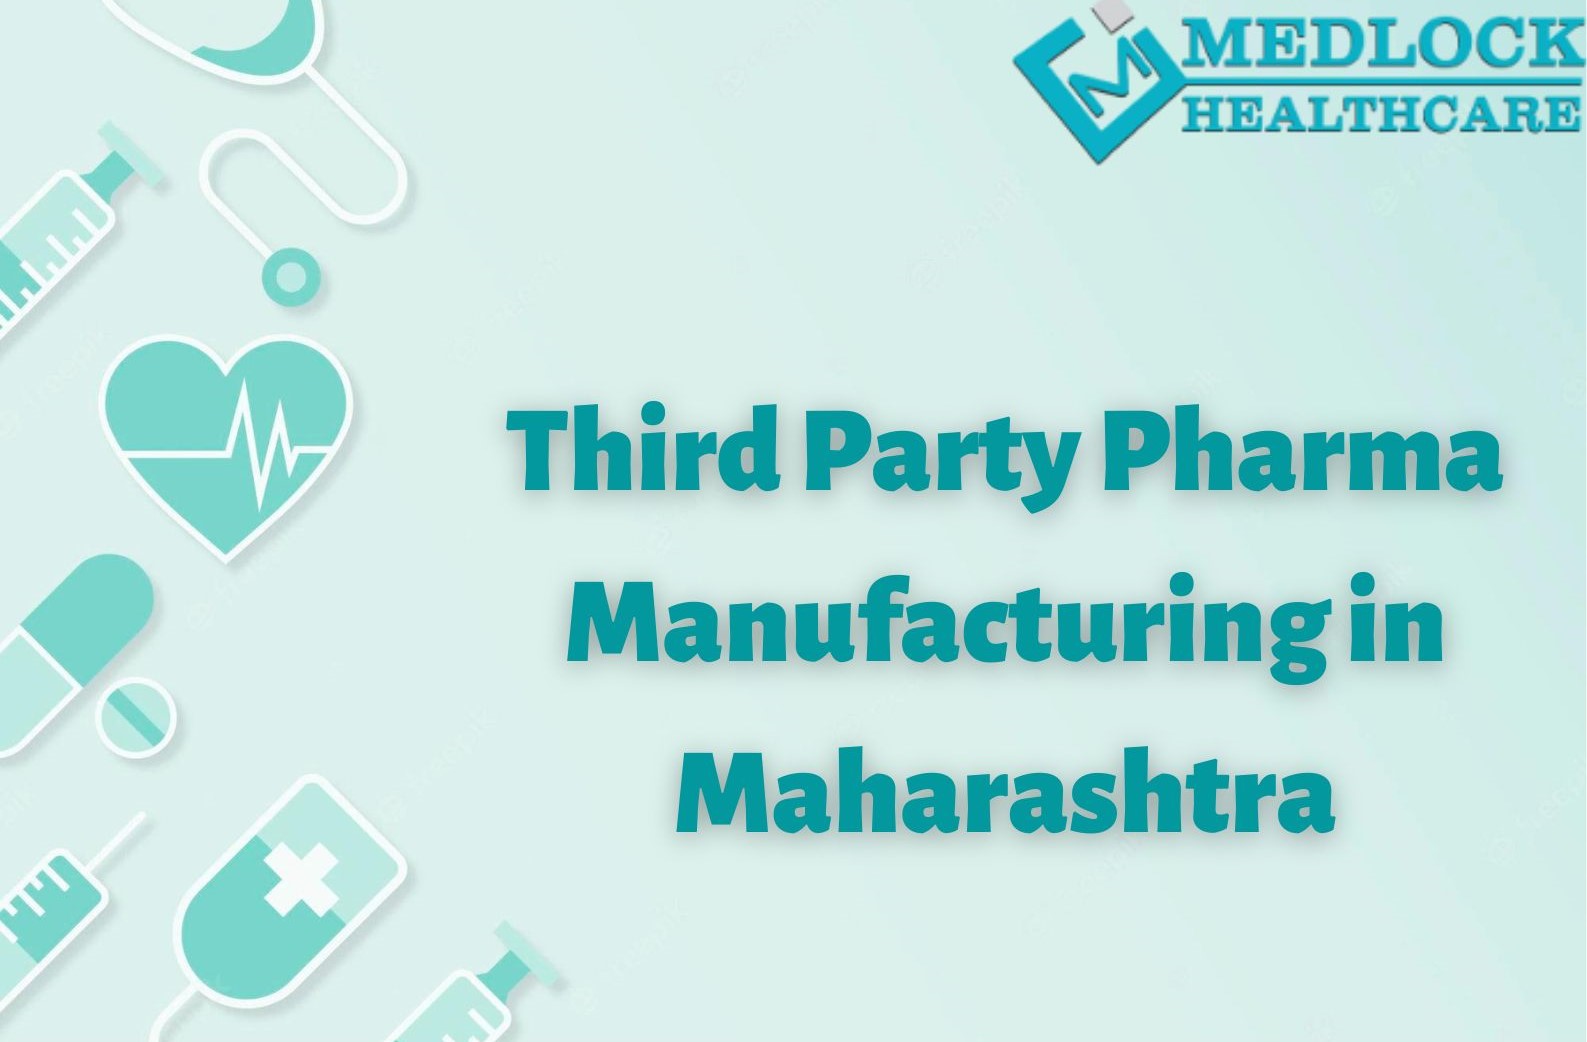 Third Party Pharma Manufacturing in Maharashtra